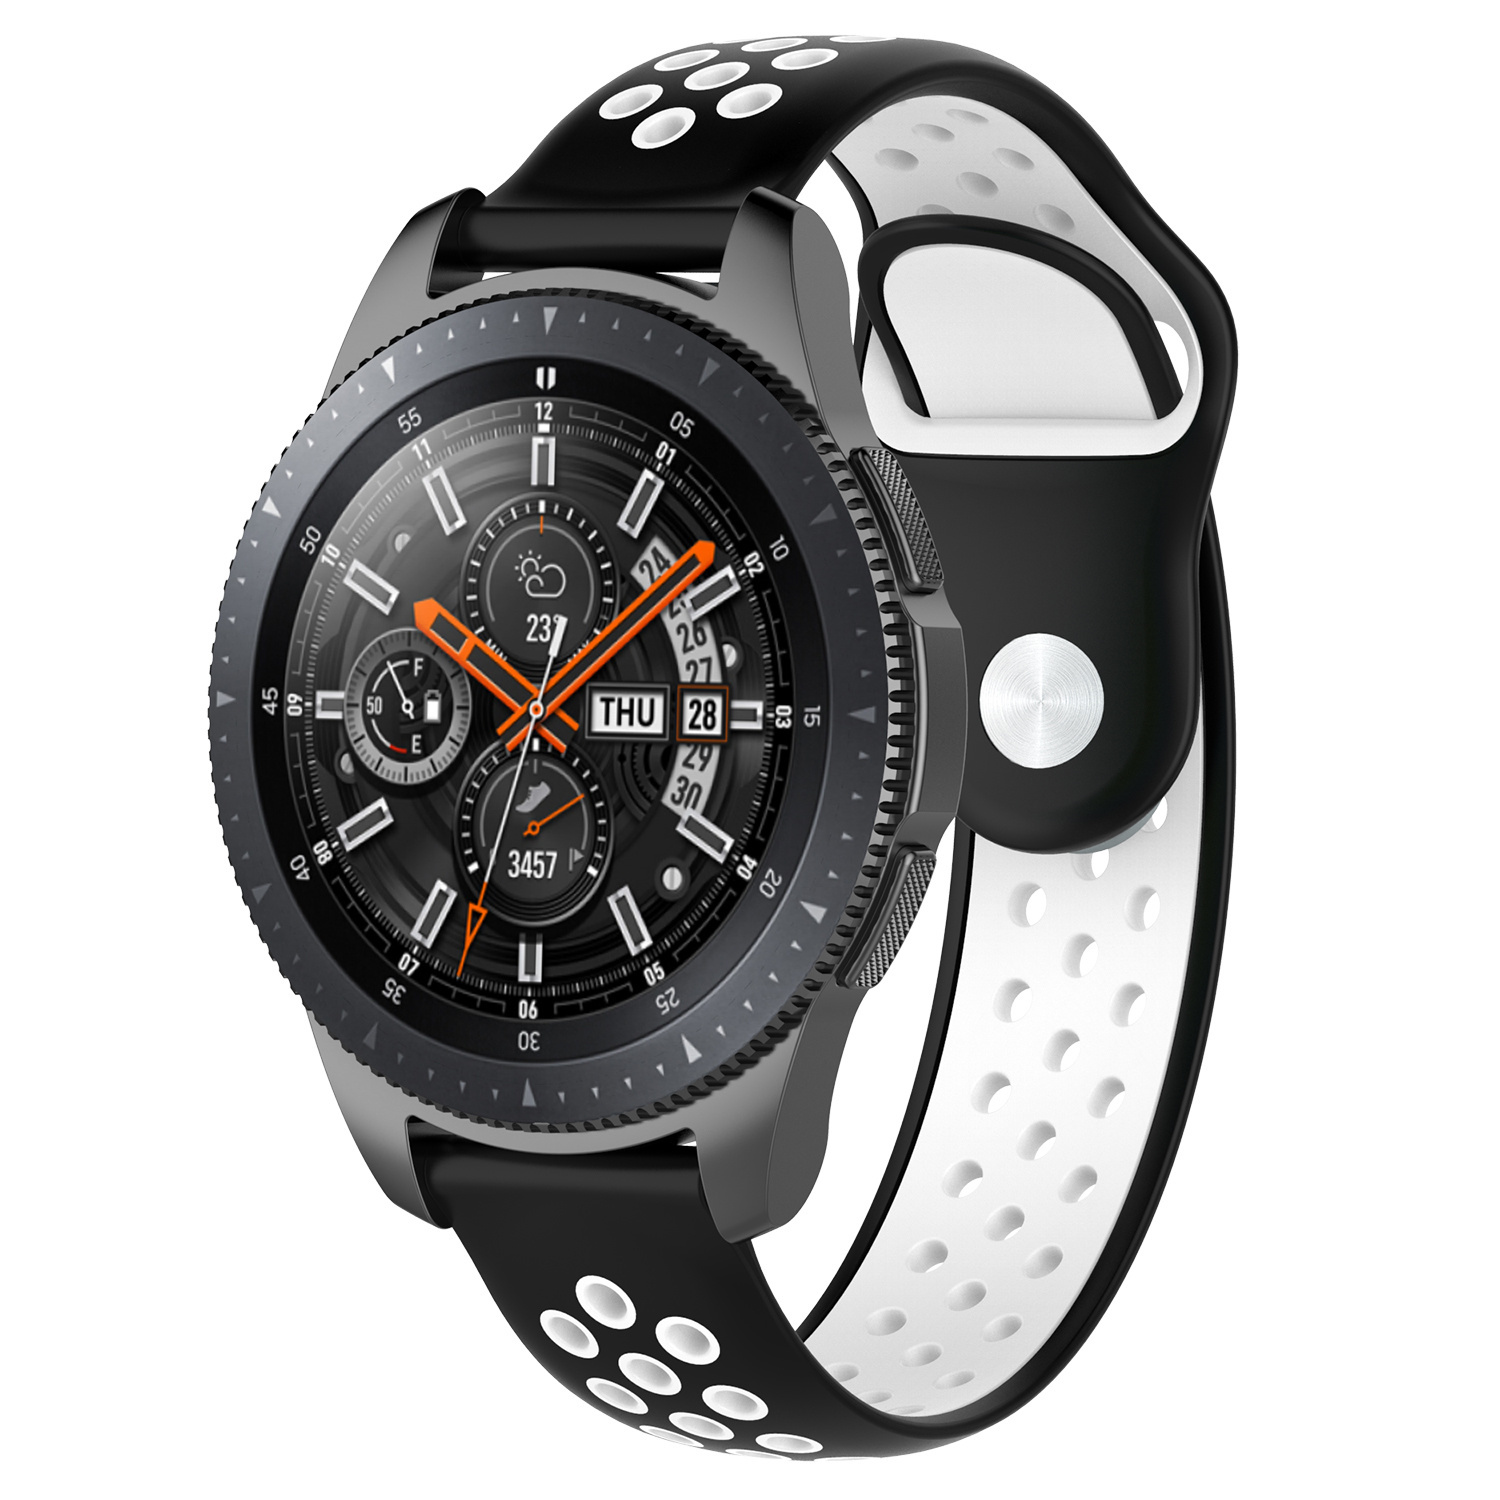 Cinturino doppio sport per Samsung Galaxy Watch - nero bianco